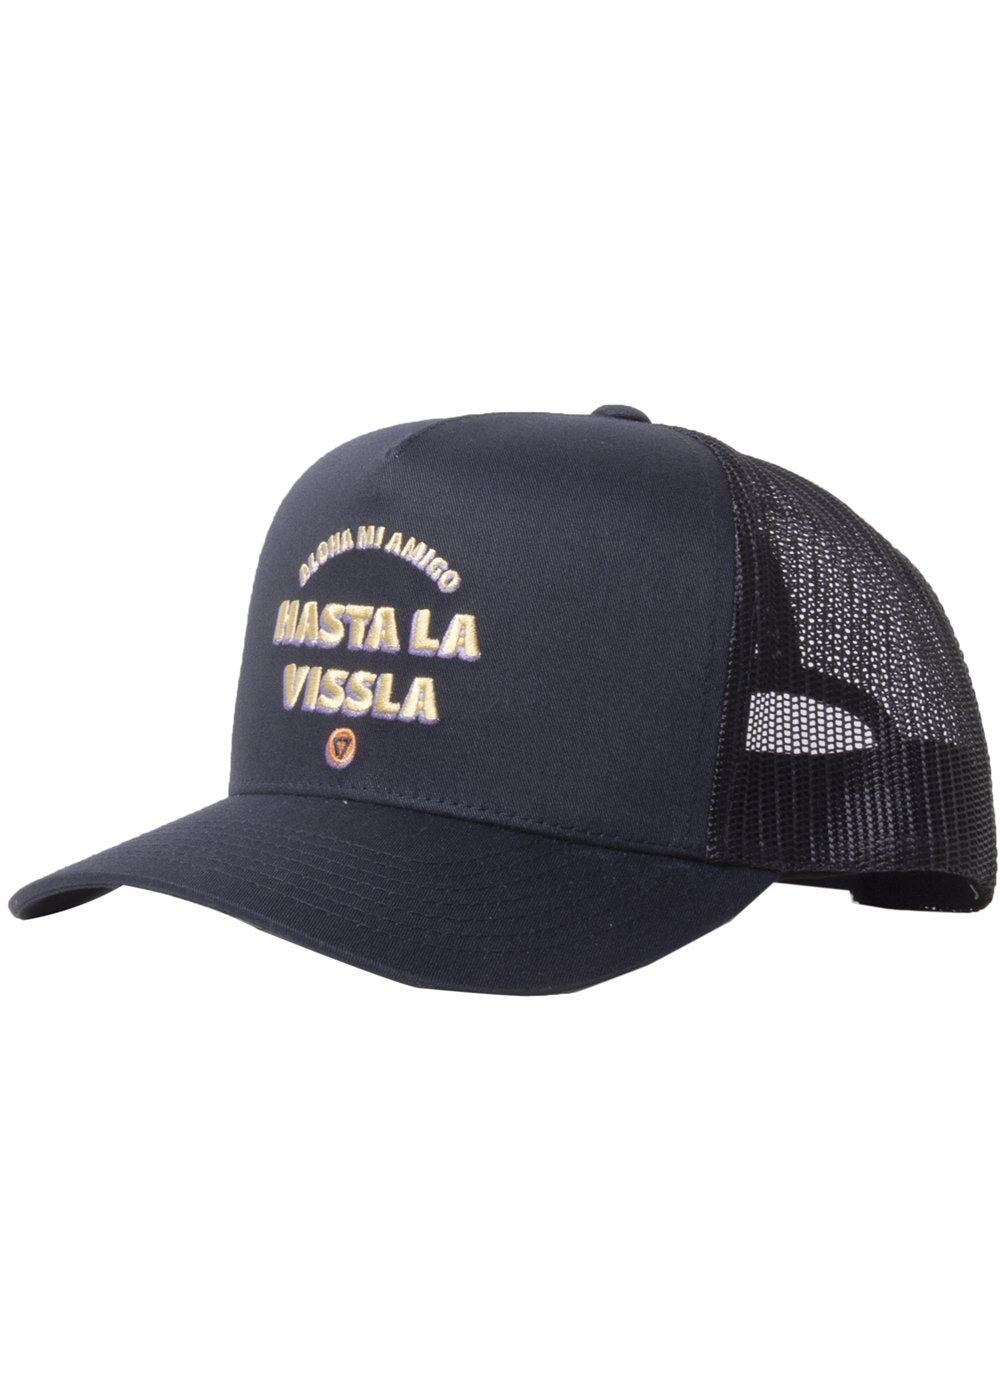 Hasta La Vissla Eco Trucker Hat (Dark Naval) - KS Boardriders Surf Shop